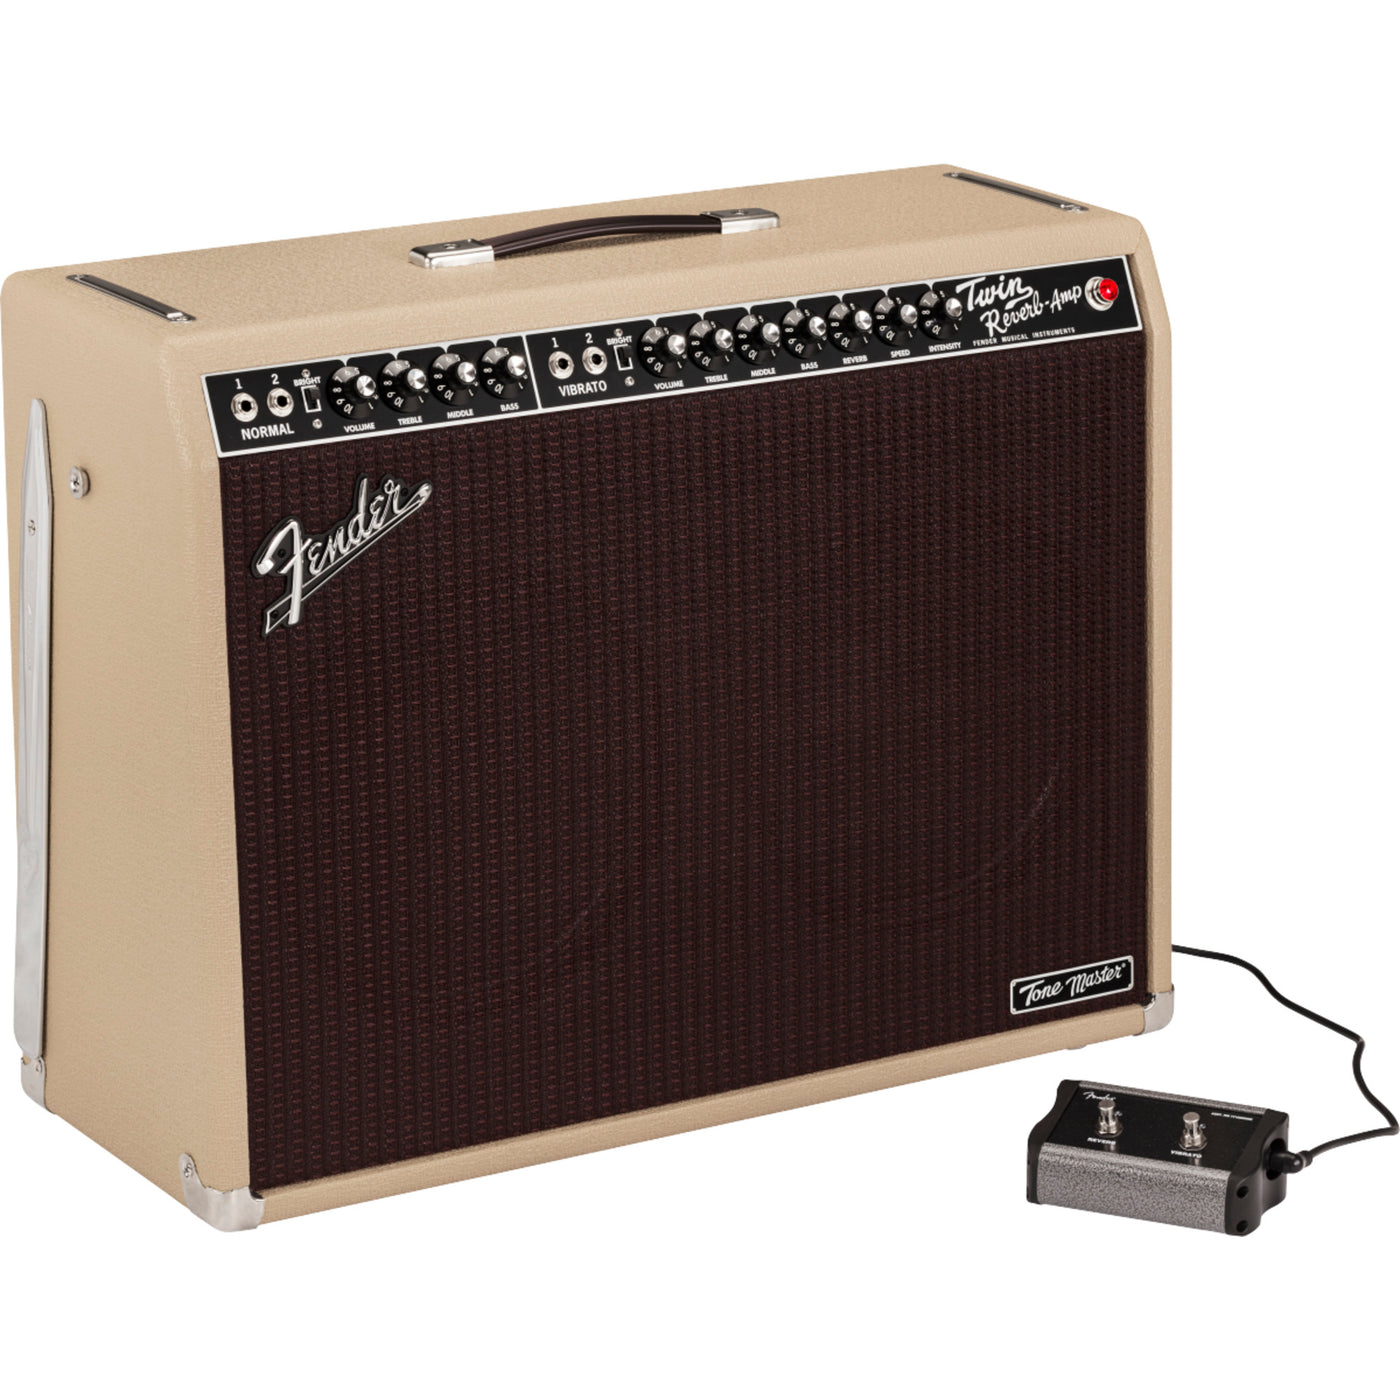 Fender Tone Master Twin Reverb 200W Guitar Combo Amplifier, Blonde (2274200982)